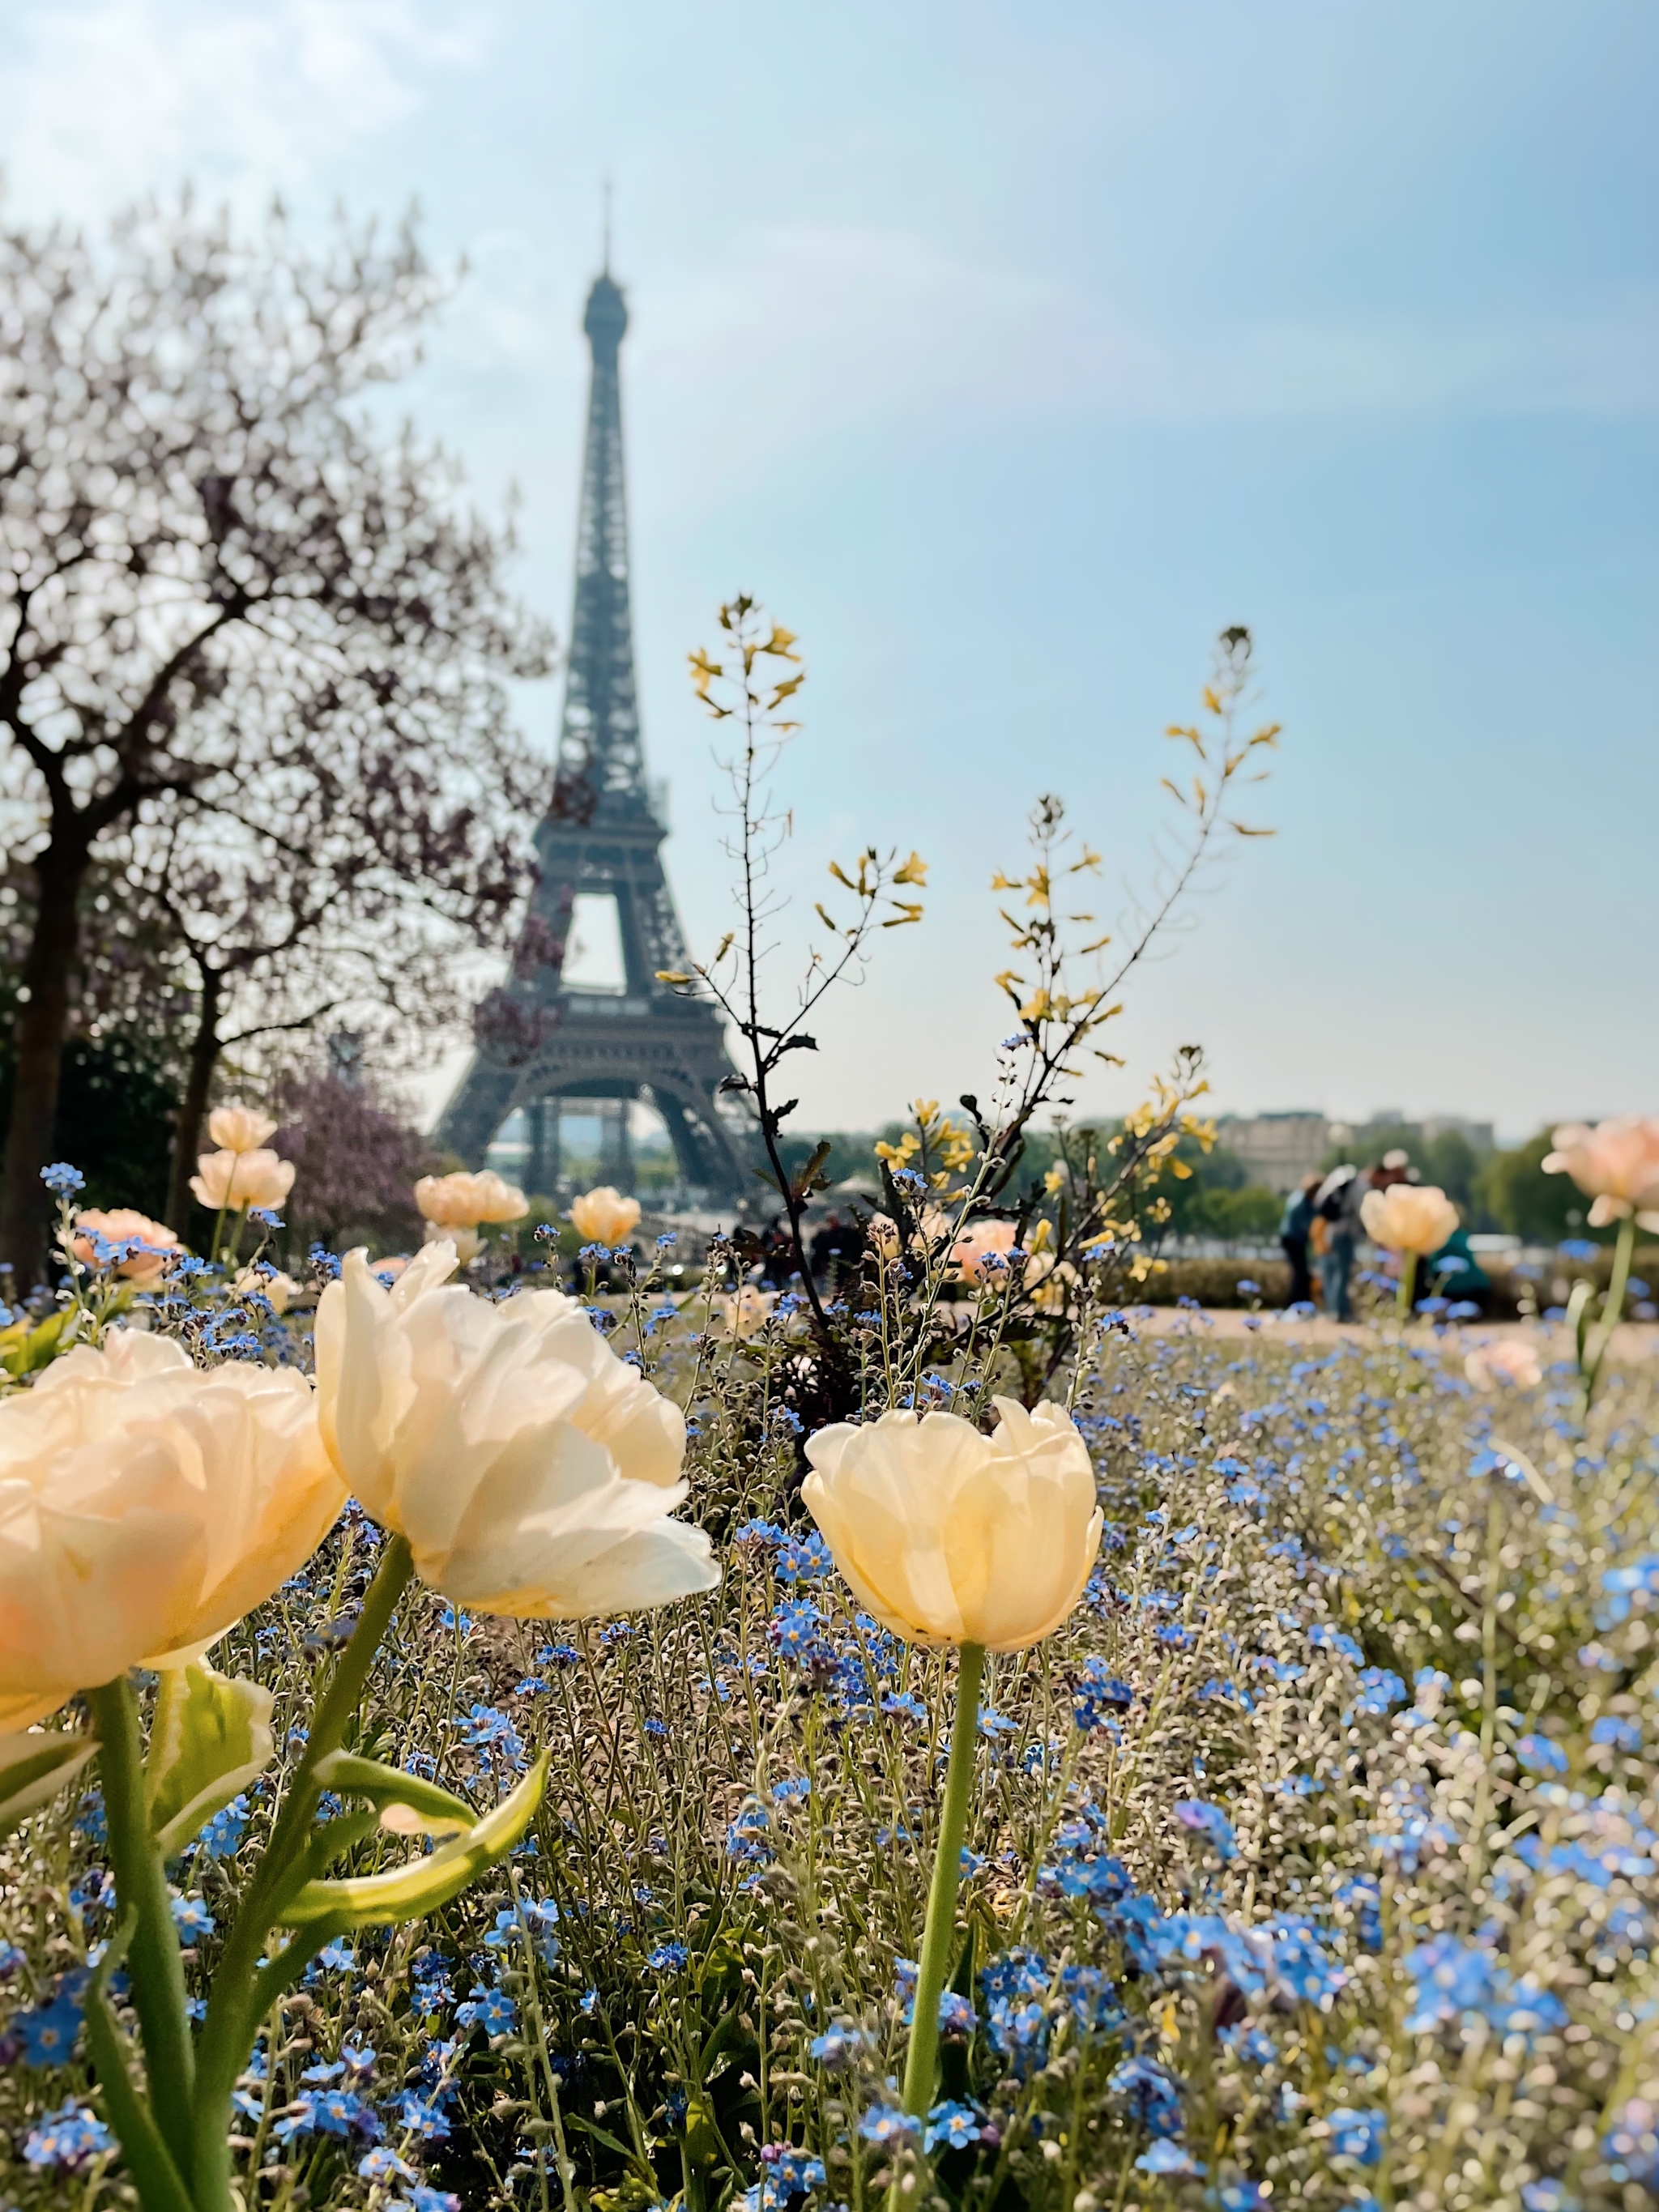 Parisian perspectives - My, Mobile photography, iPhone, Paris, Eiffel Tower, Vsco, Longpost